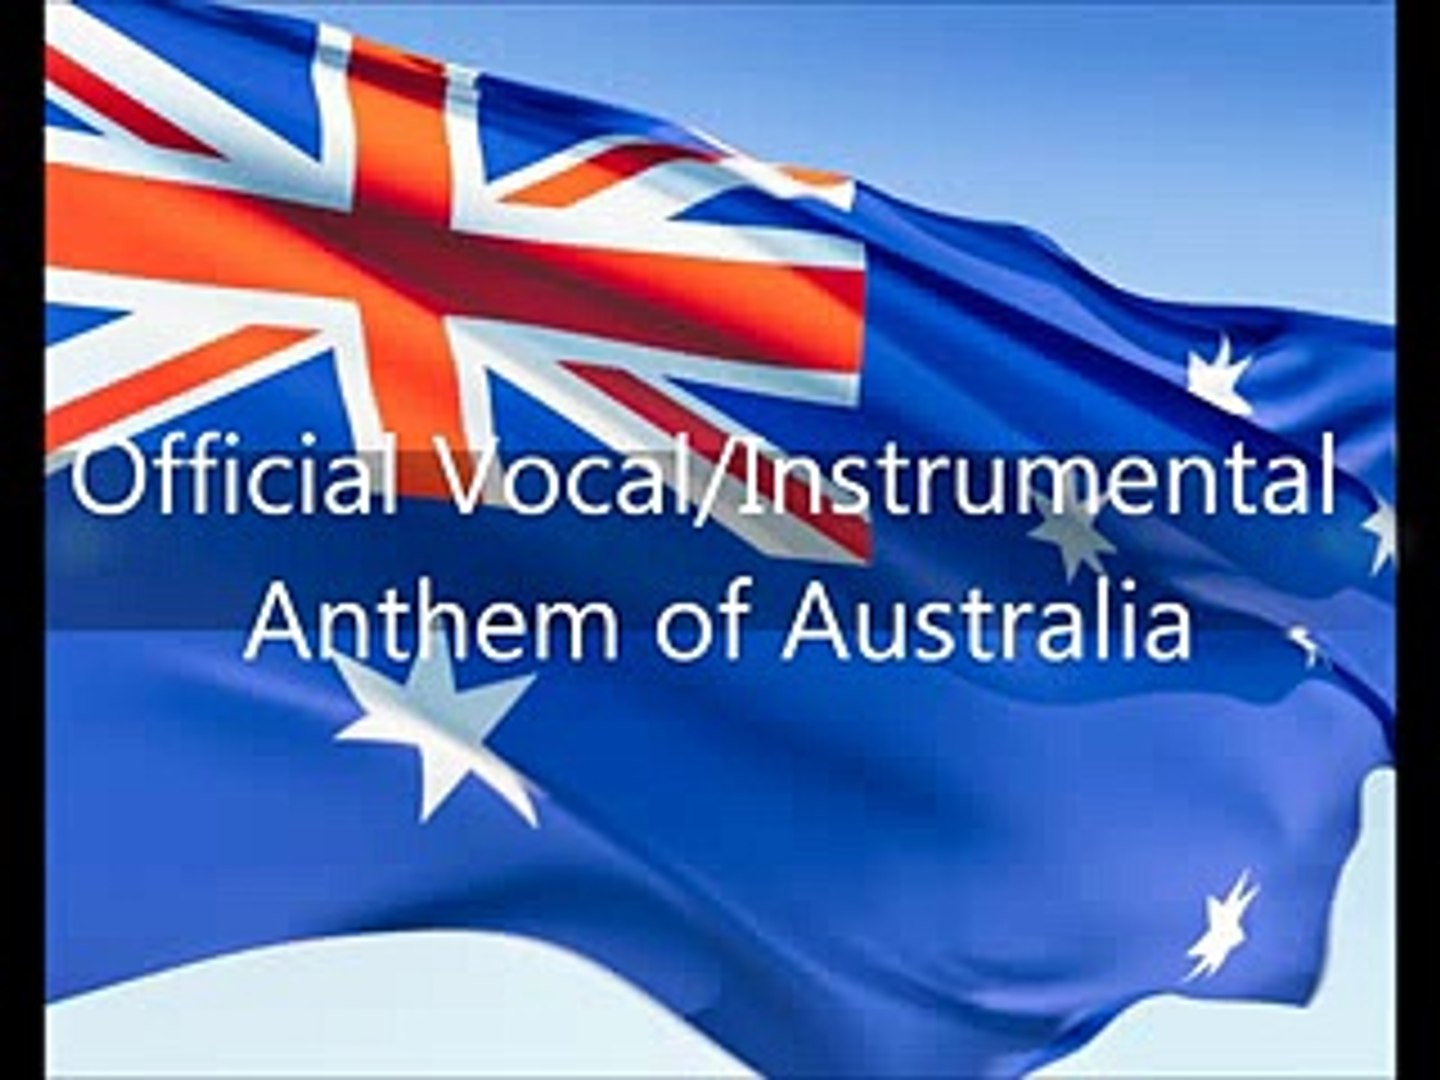 Australian National Anthem - Australia Fair' (EN) - video Dailymotion